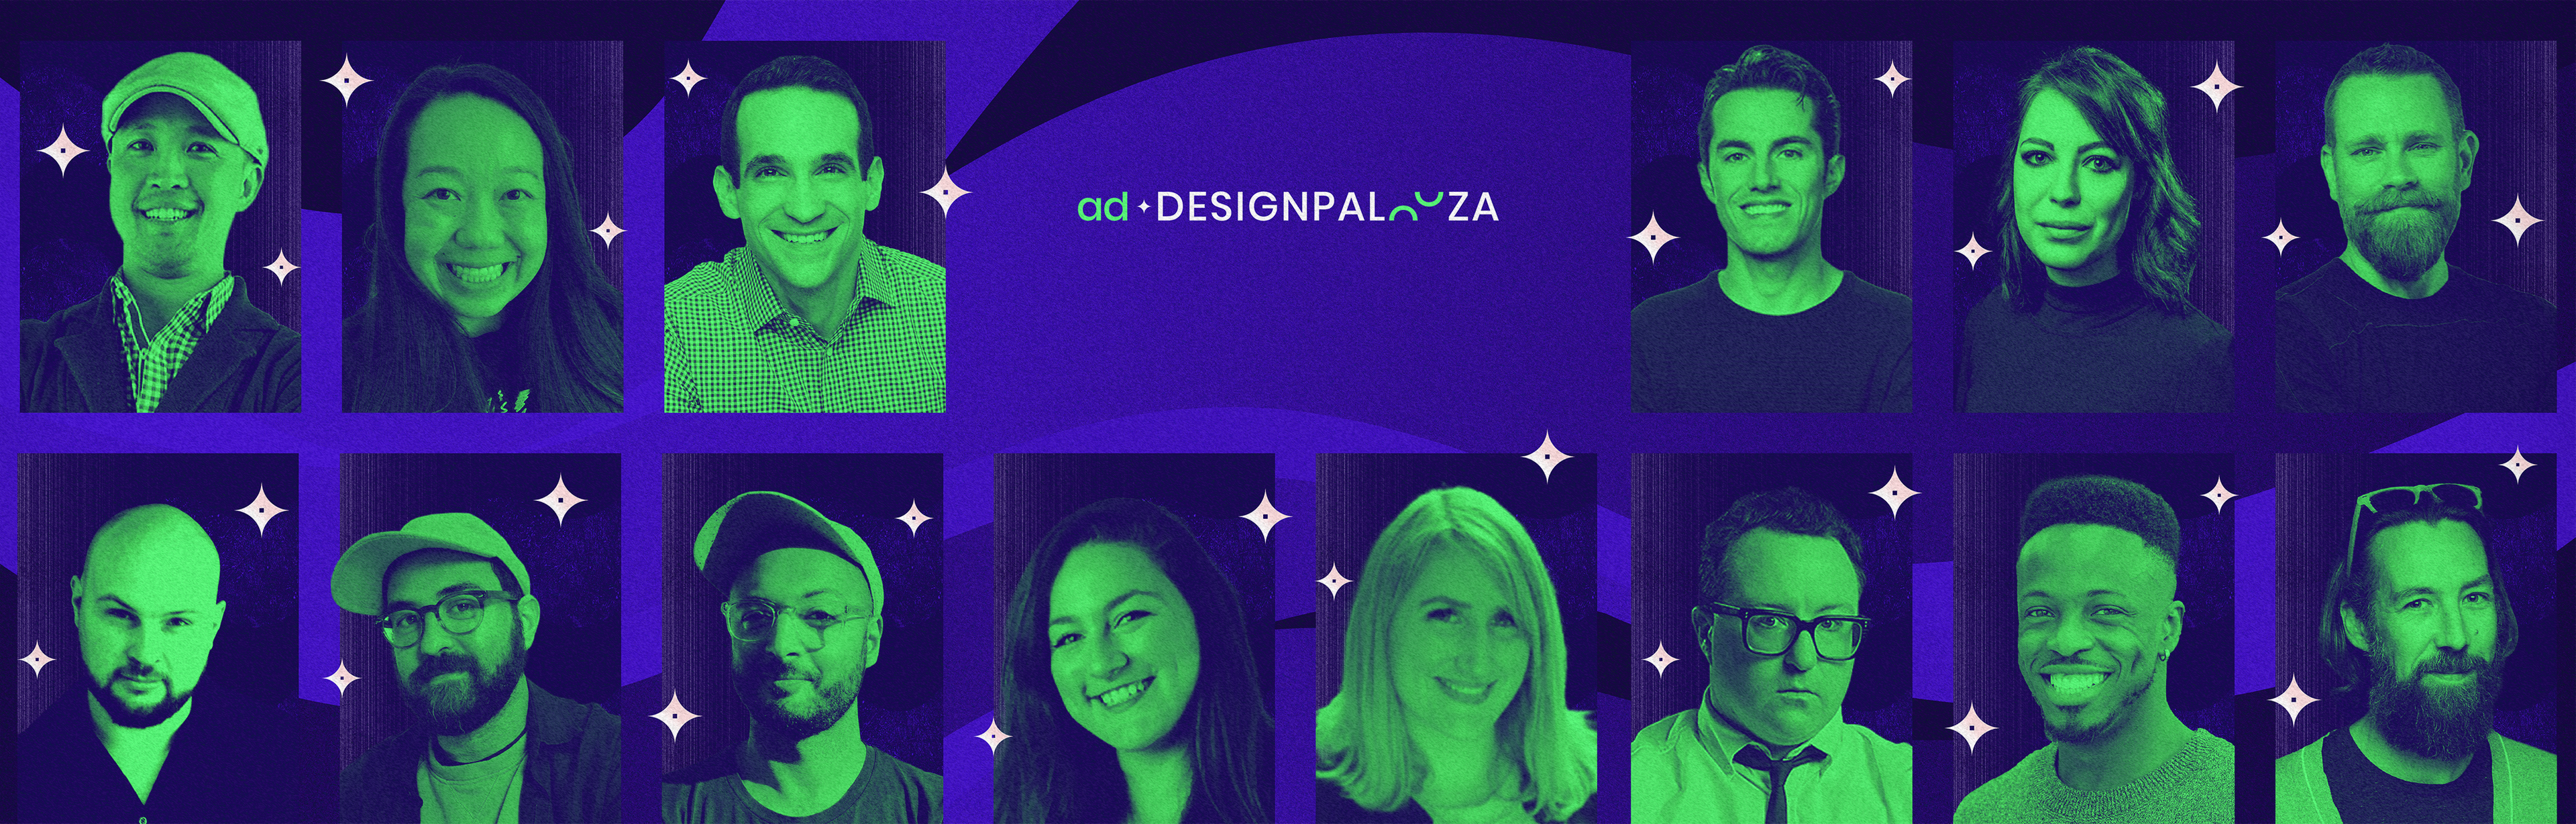 19 Takeaways About Ads, Creativity & Design From Ad Designpalooza